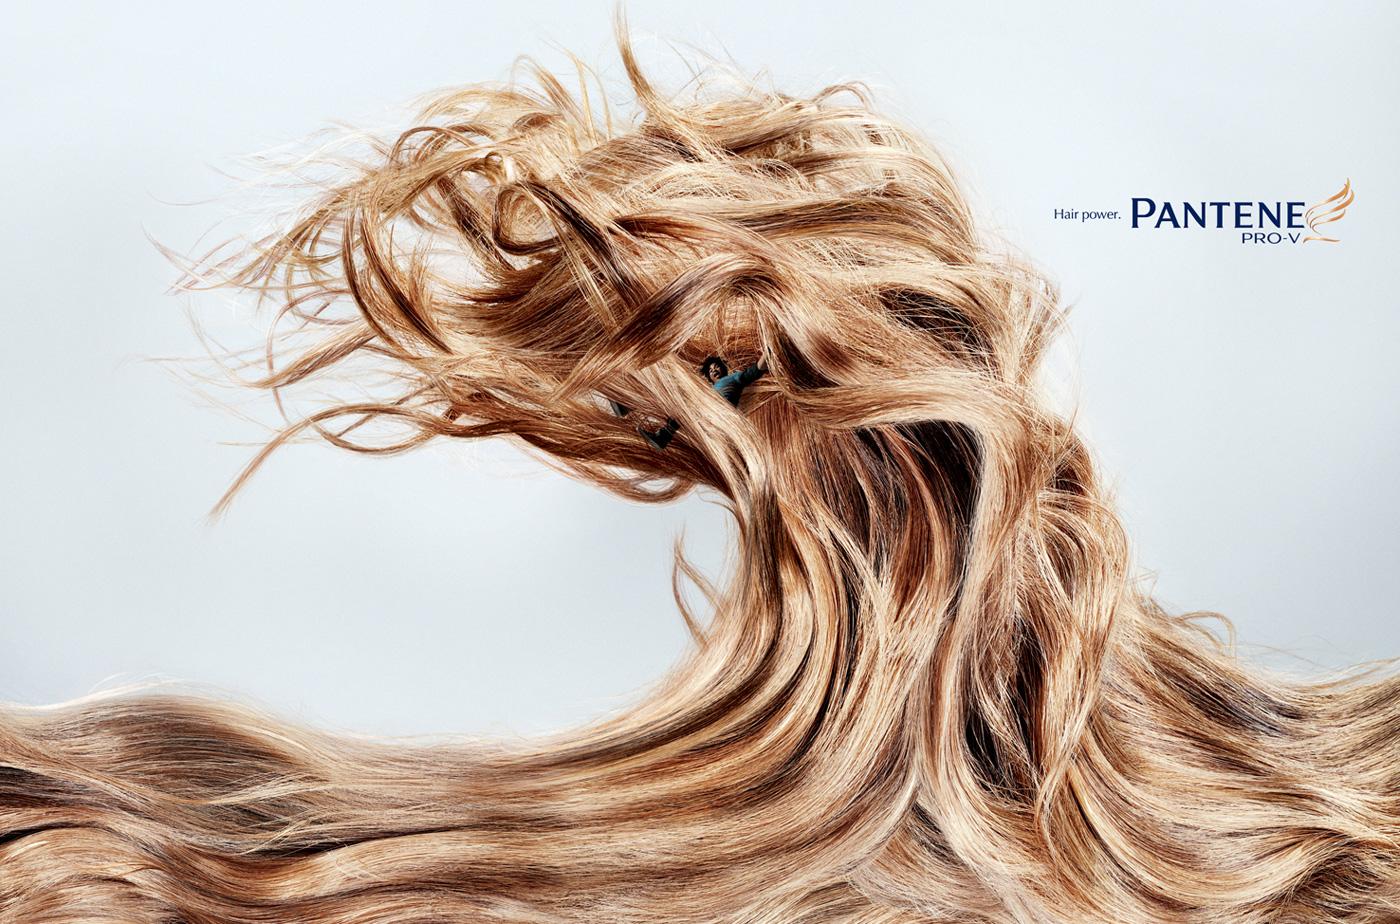 Пряди твоих волос. Креативная реклама шампуня. Реклама шампуня для волос. Волосы фон. Креативная реклама шампуня для волос.